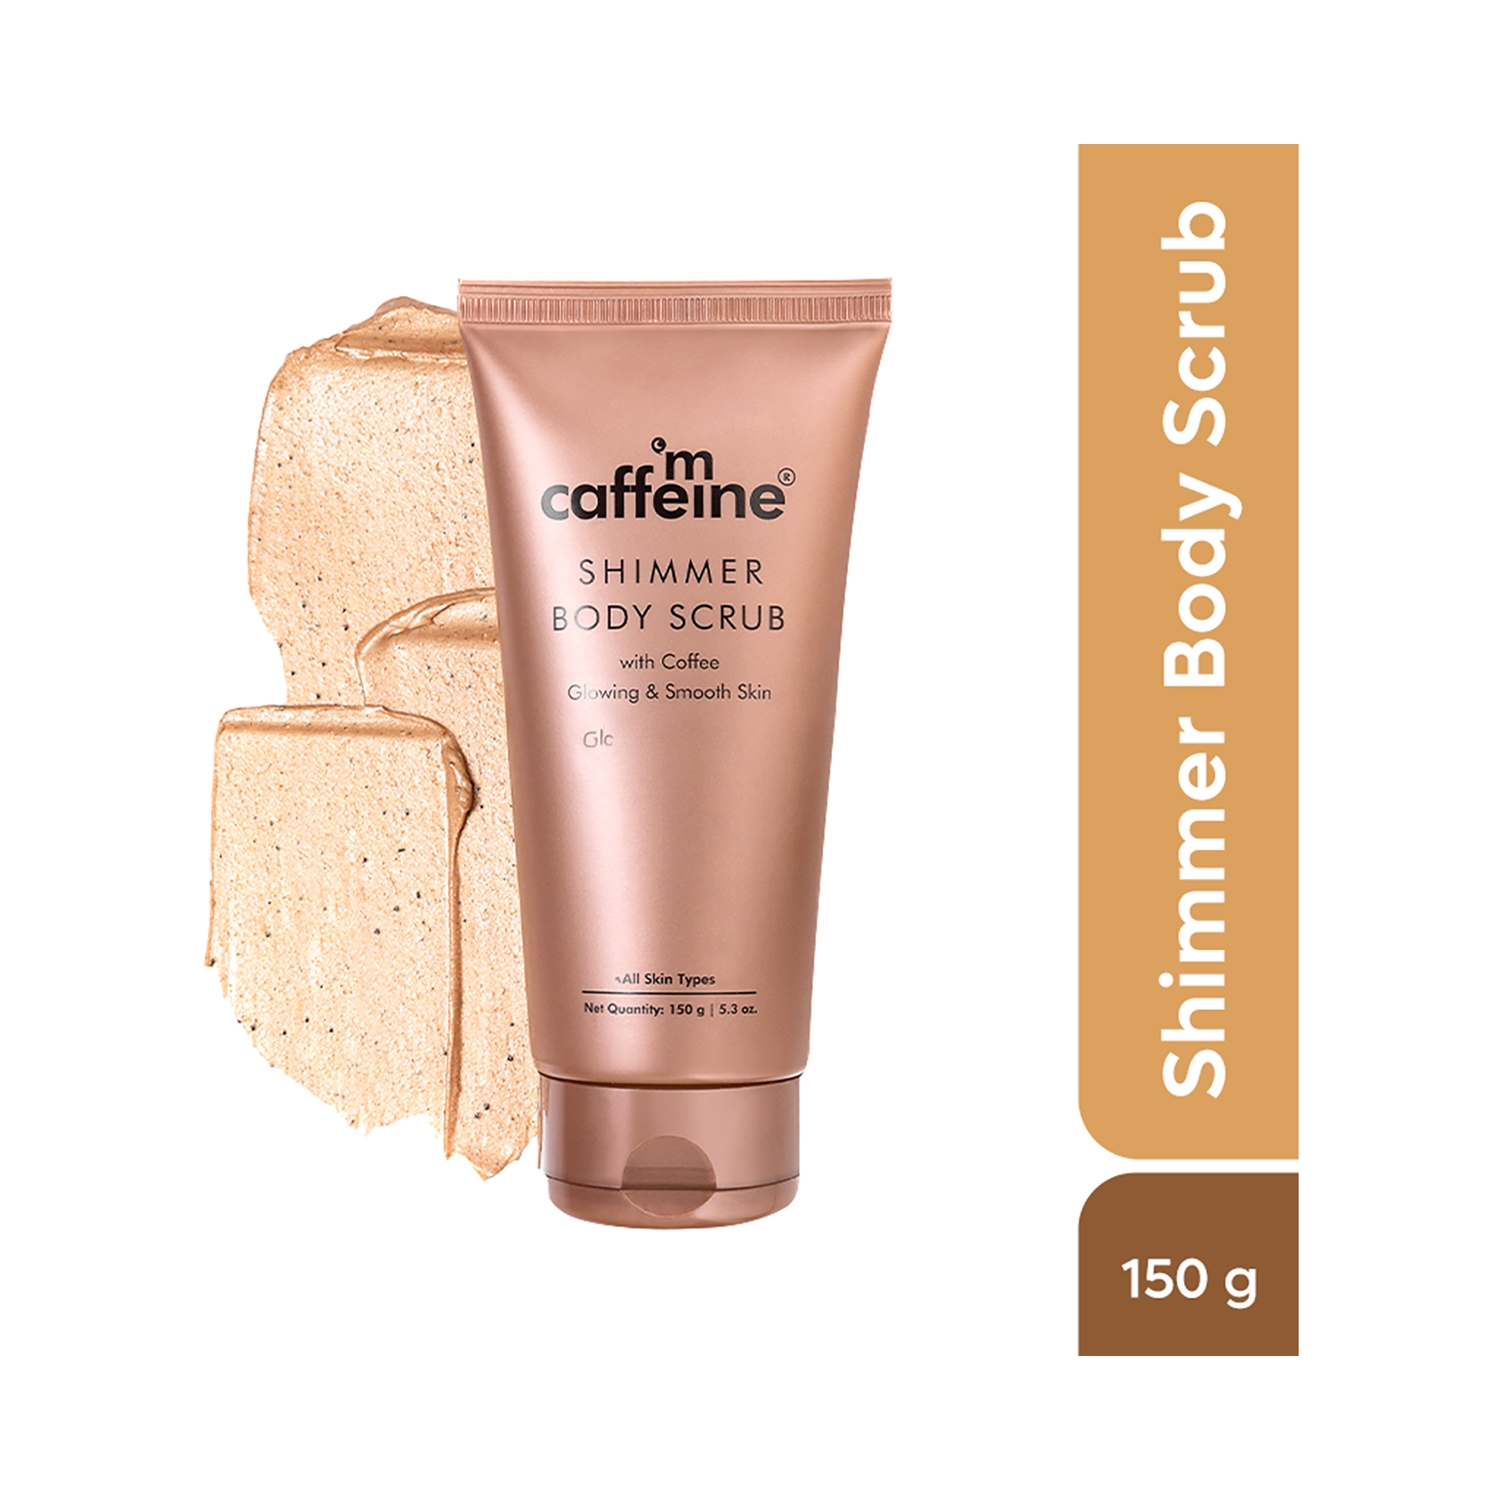 mCaffeine | mCaffeine Shimmer Body Scrub with Coffee for Smooth & Glowing Skin (150g)